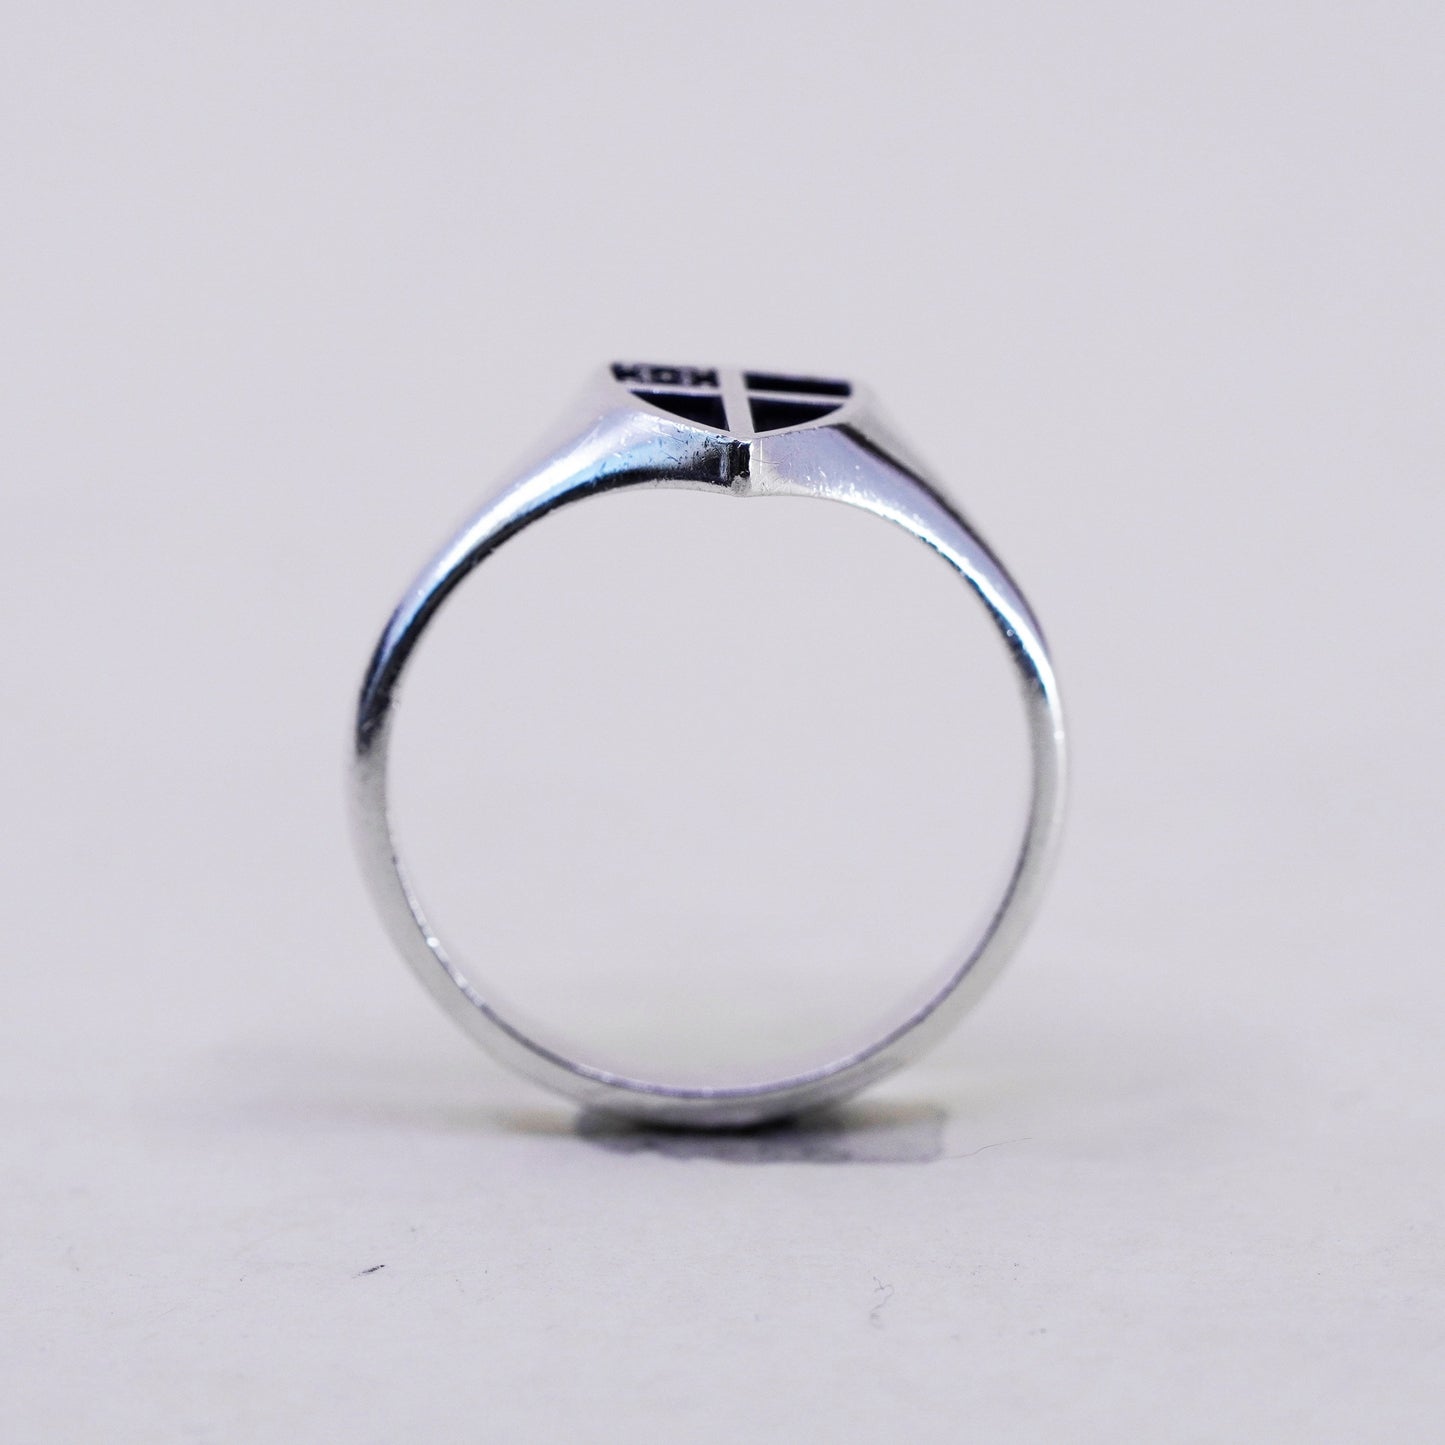 Size 10.75, vintage symbol Art sterling 925 silver handmade shield band ring